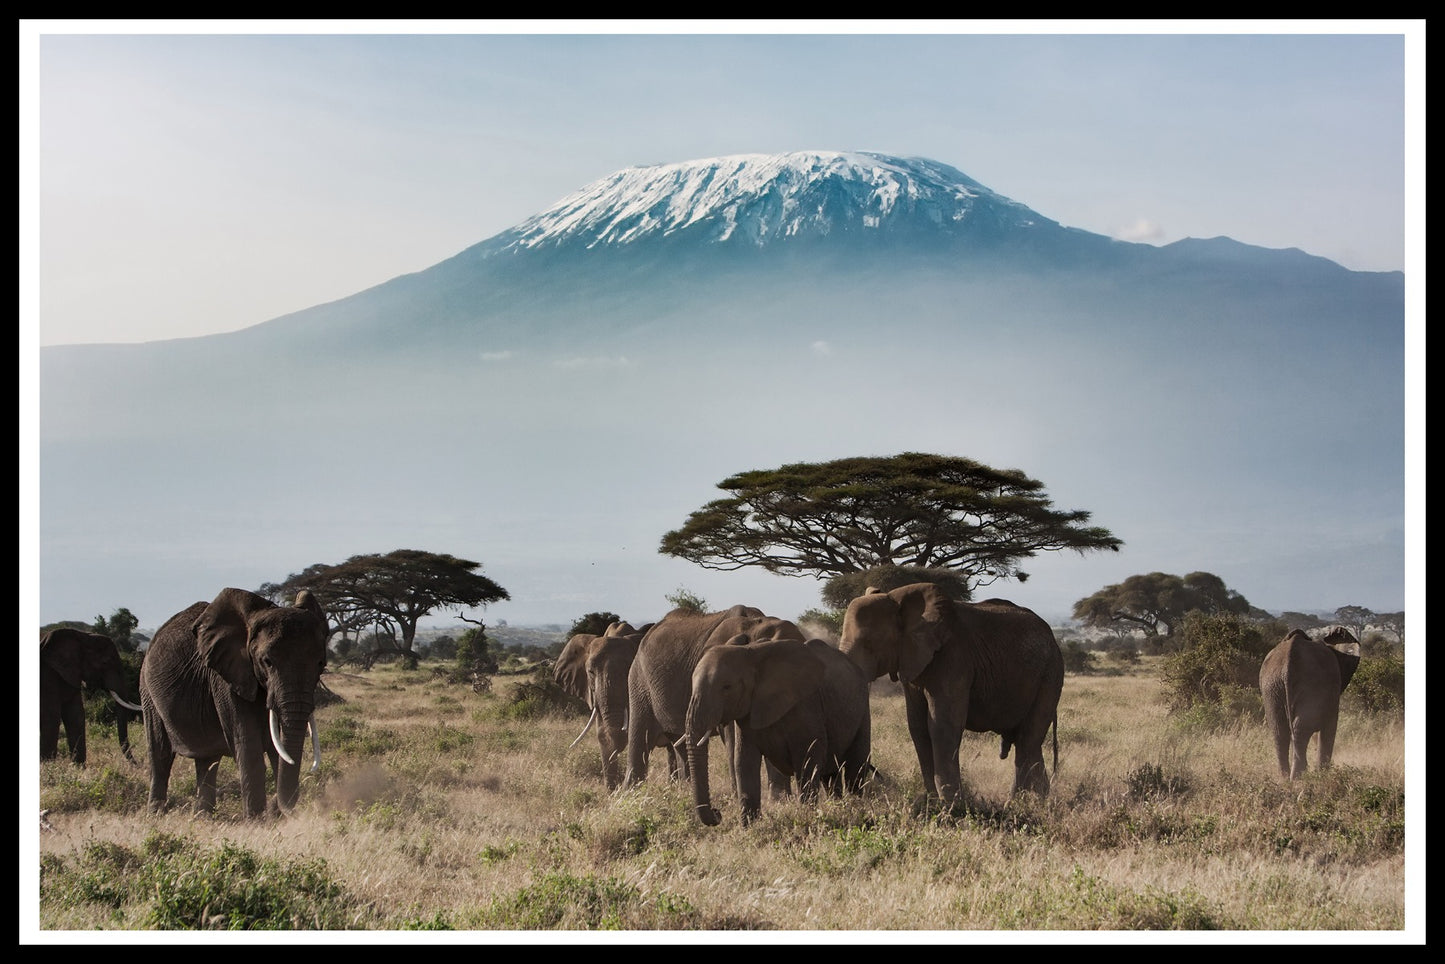  poster Kilimanjaro voor olifanten